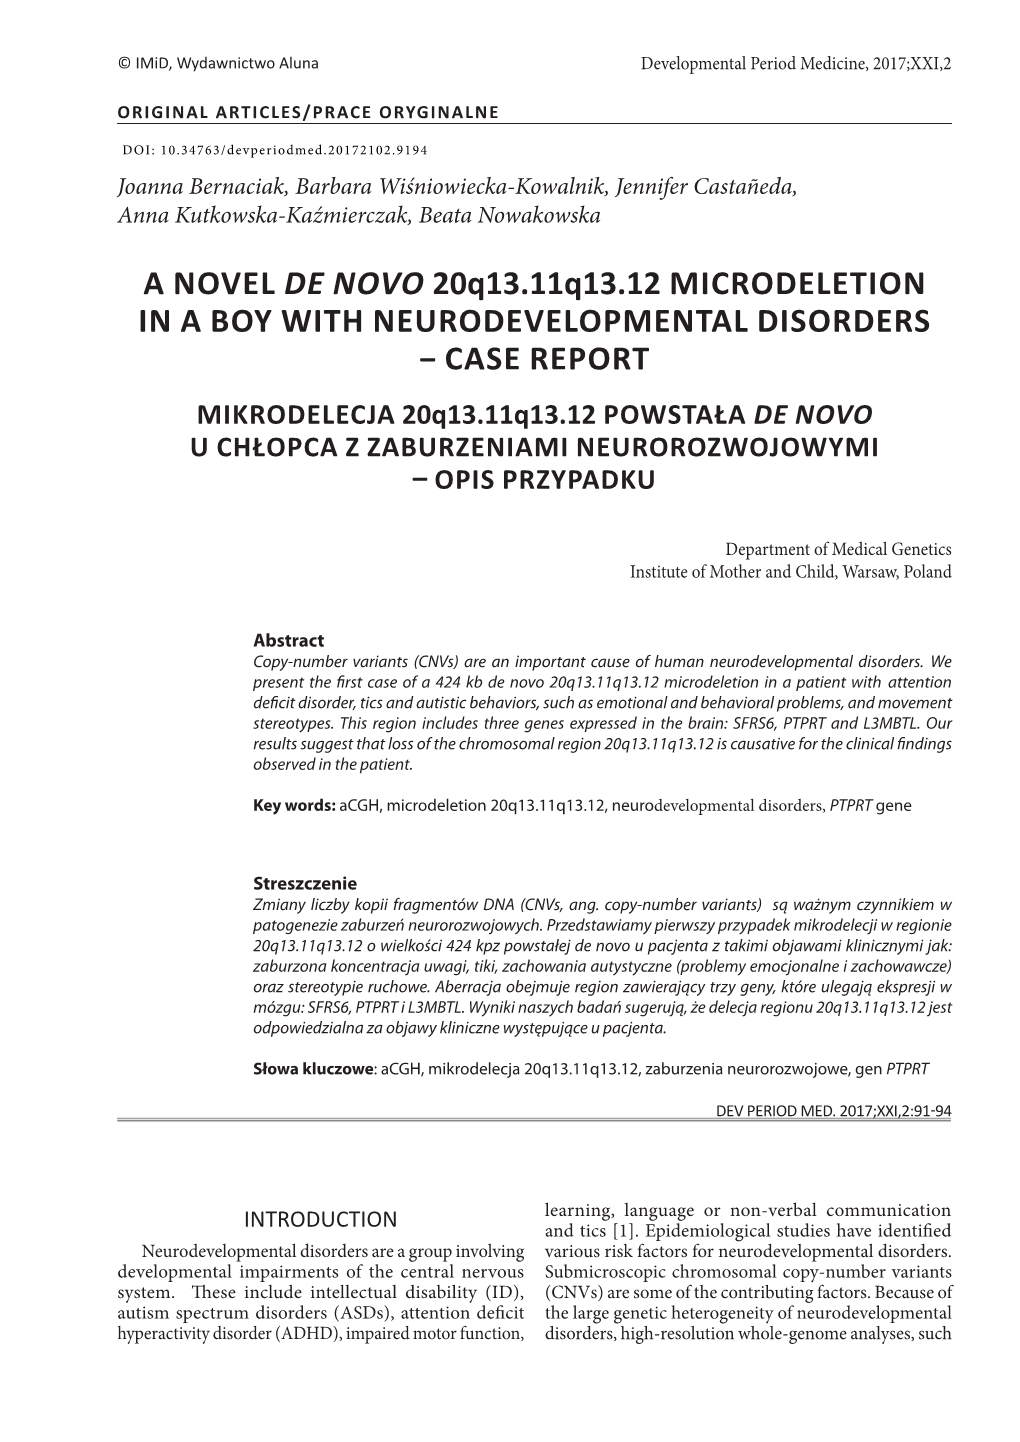 A NOVEL DE NOVO 20Q13.11Q13.12 MICRODELETION in a BOY with NEURODEVELOPMENTAL DISORDERS − CASE REPORT